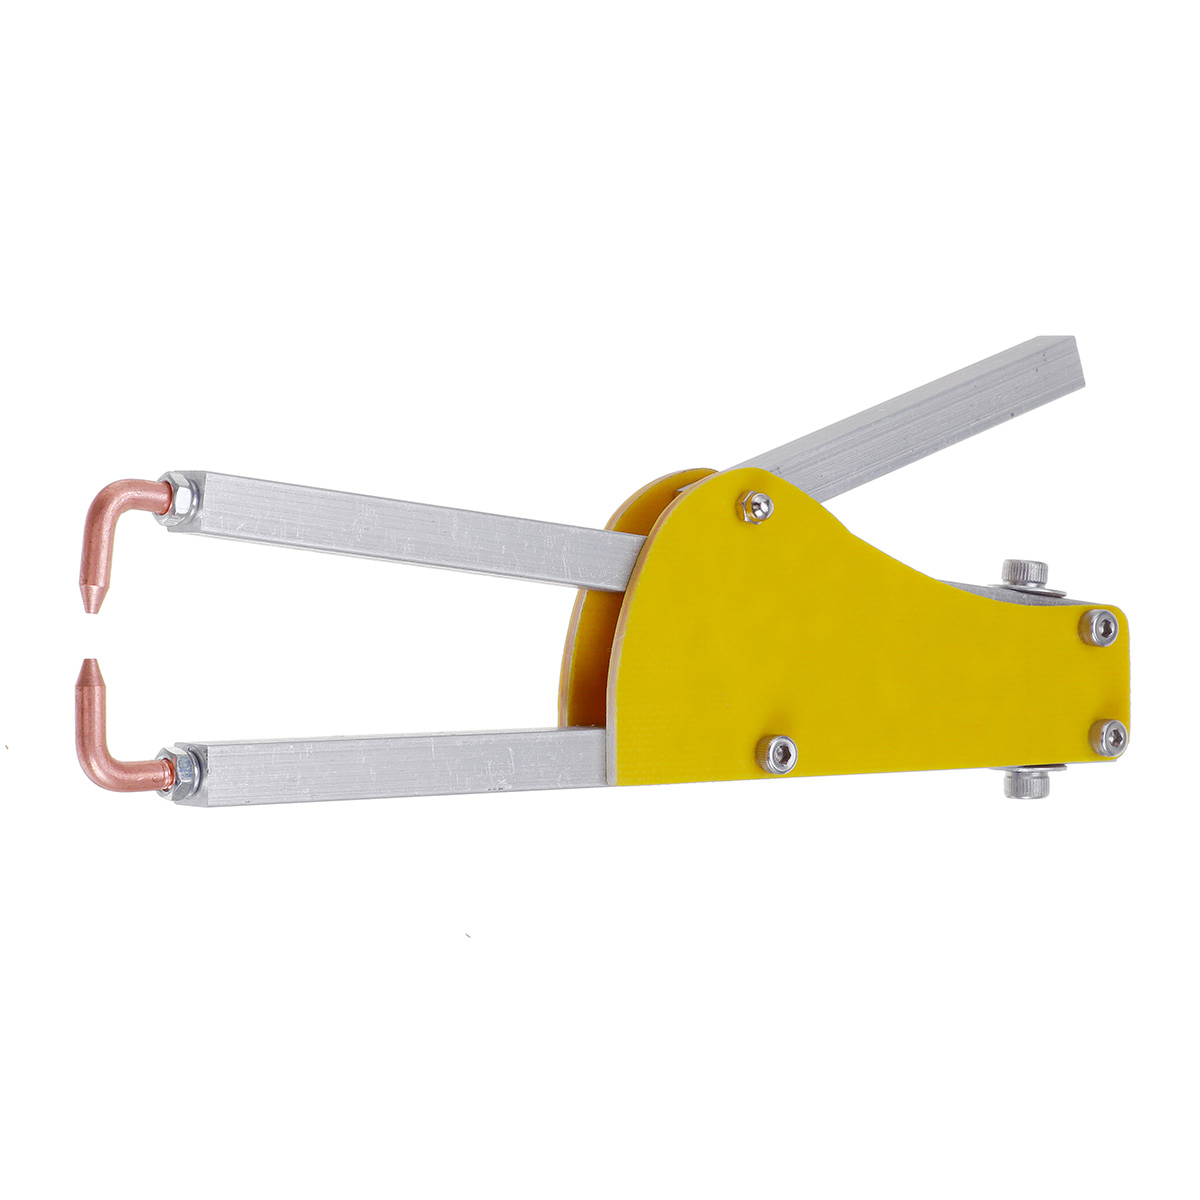 Portable-Spot-Welder-Special-Shape-Metal-Welding-Pliers-18650-Battery-Spot-Welder-Accessories-Metal--1847767-6